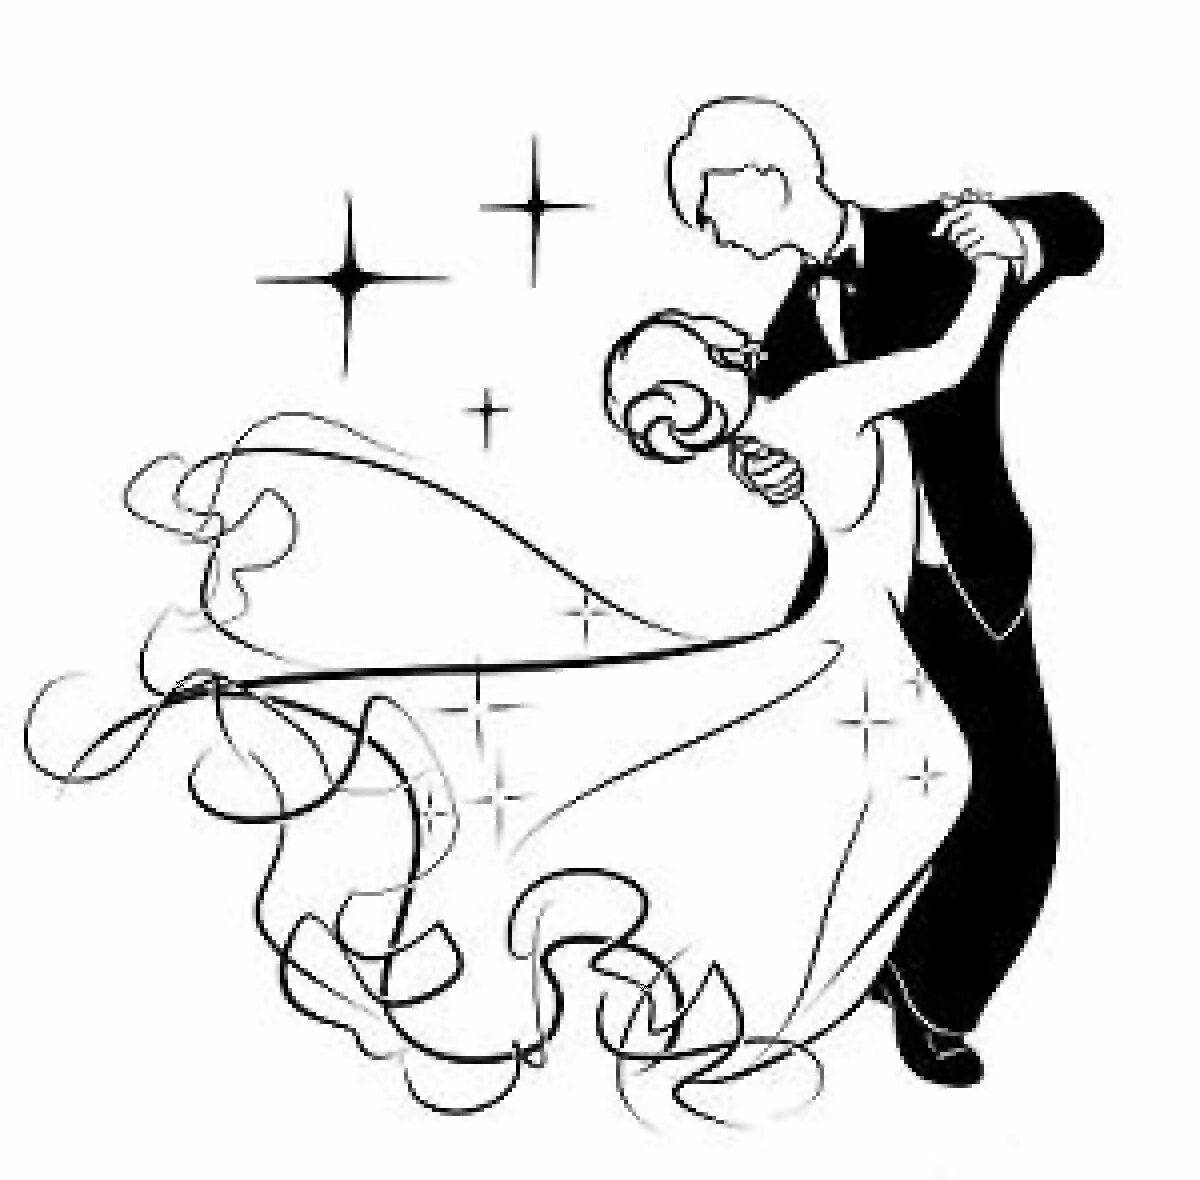 Seductive positions for ballroom dancing